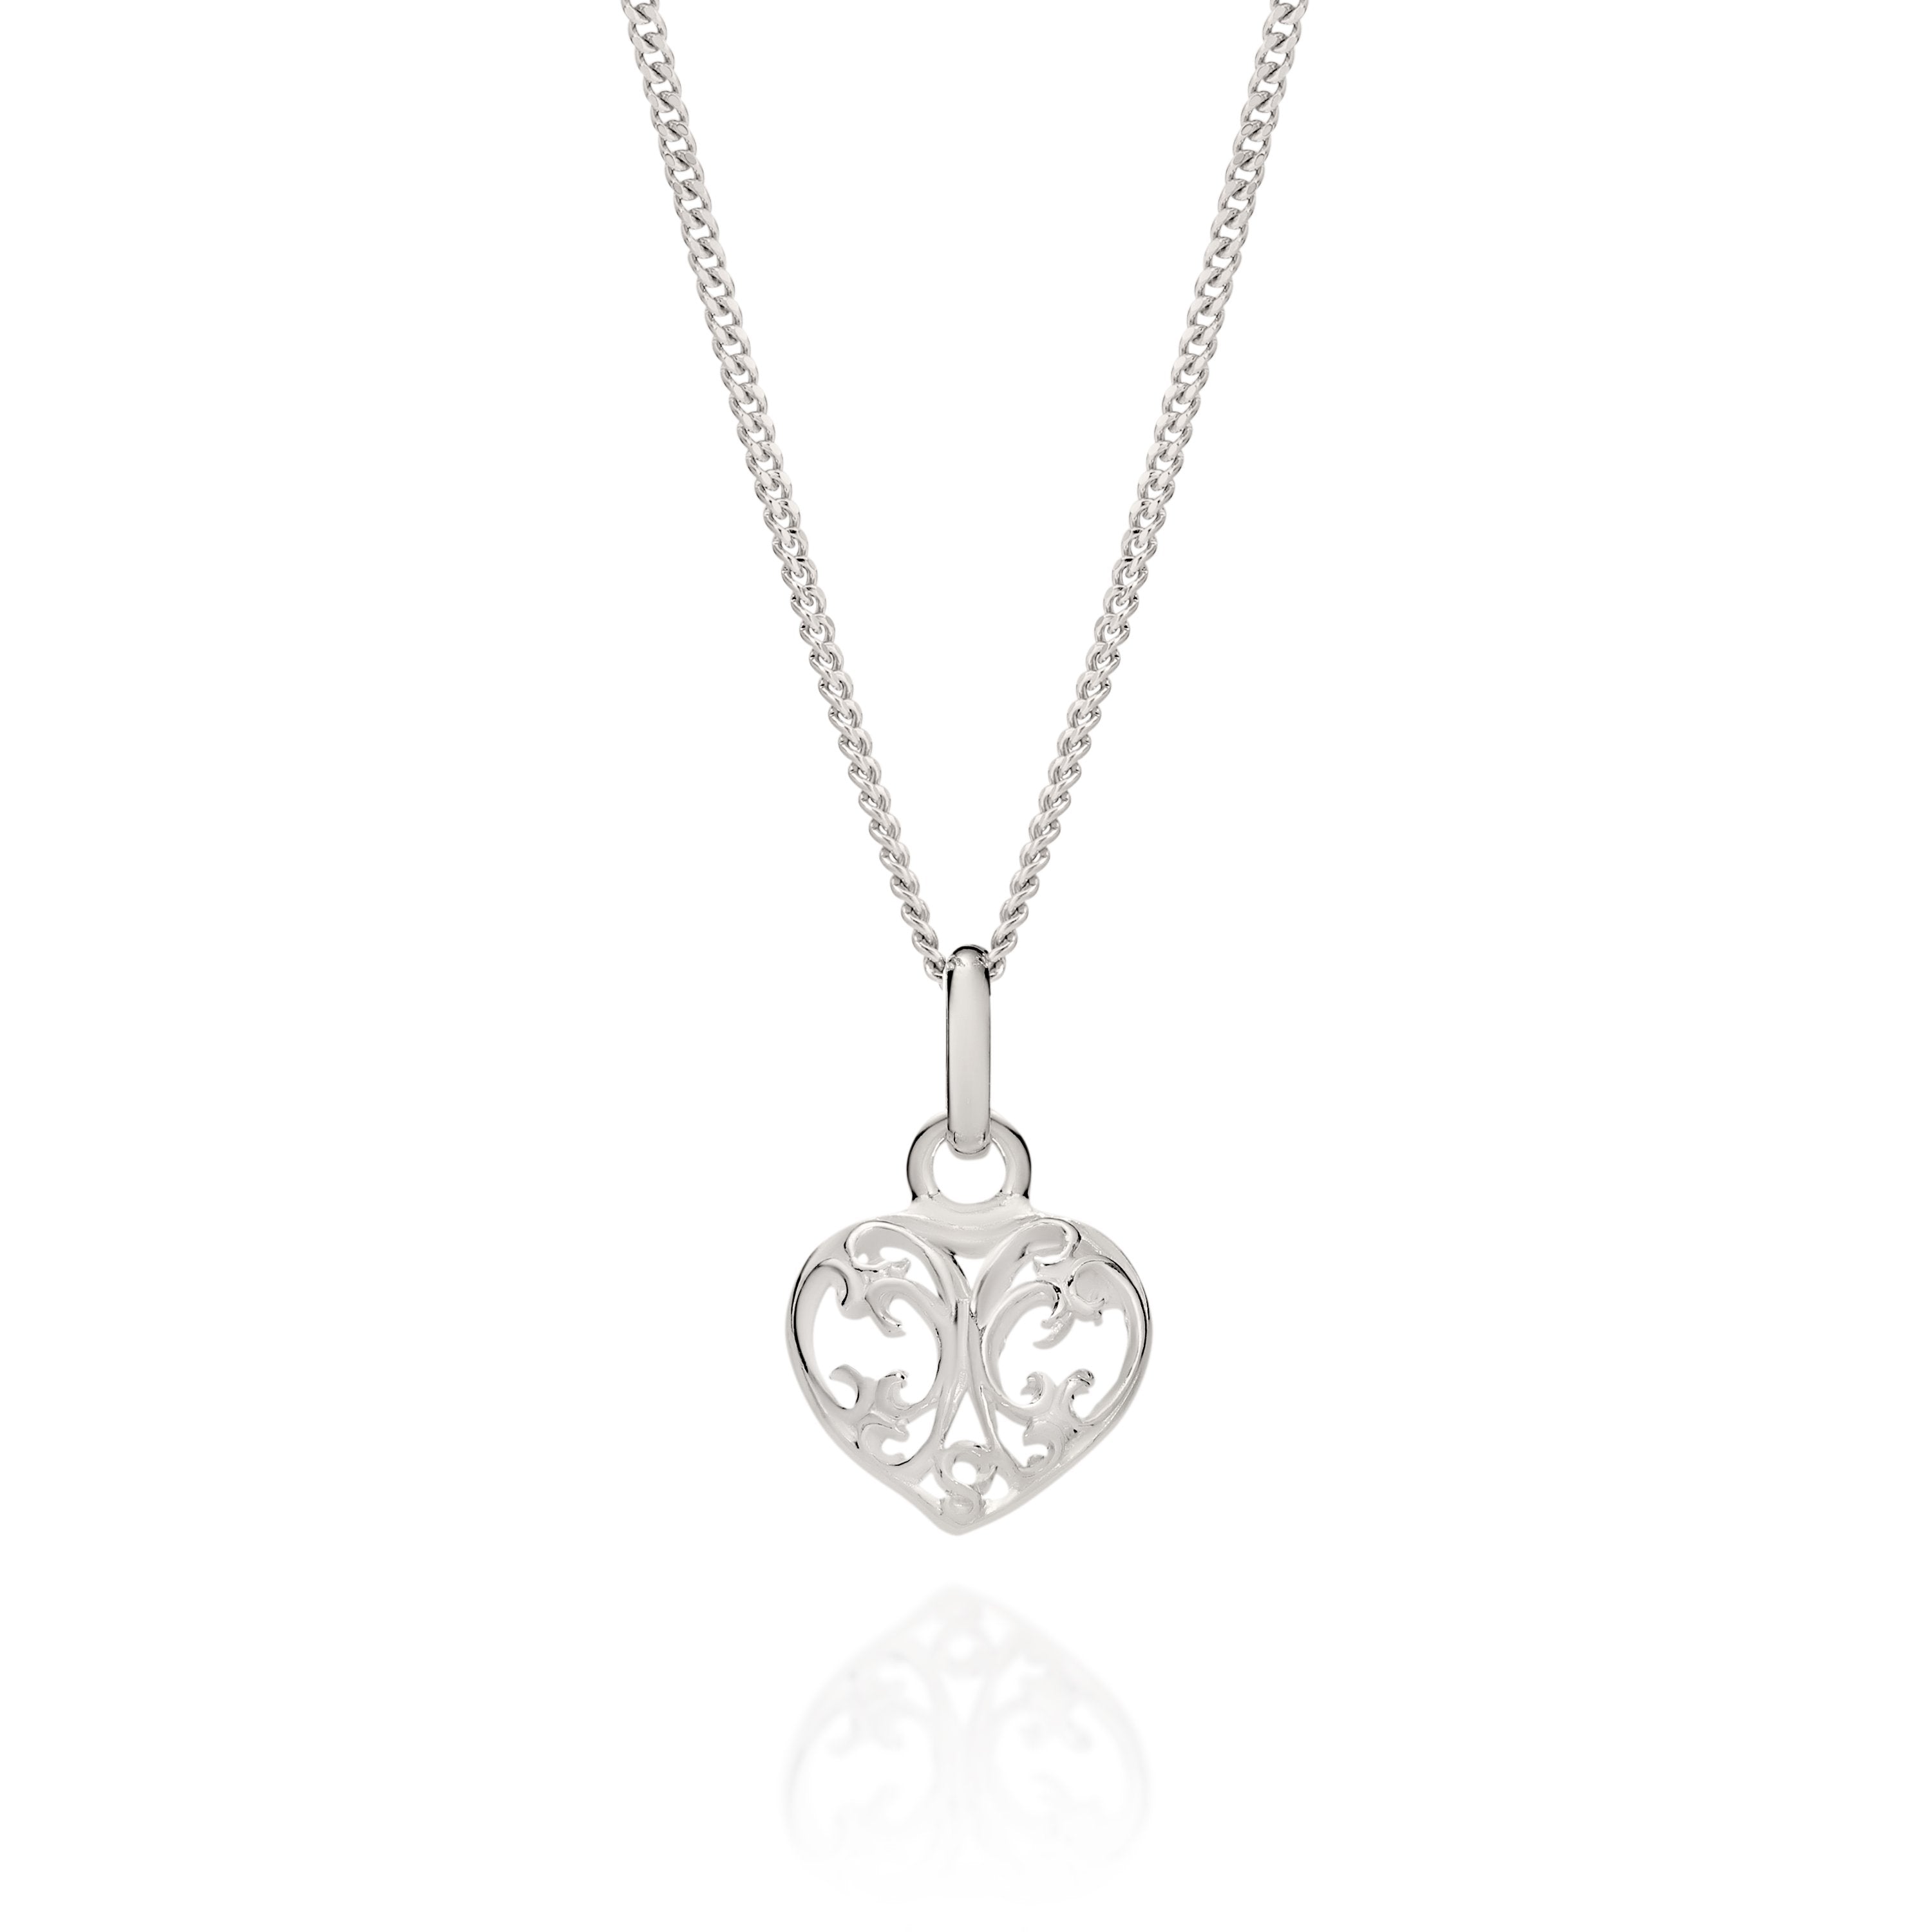 Silver small filigree puffed heart pendant